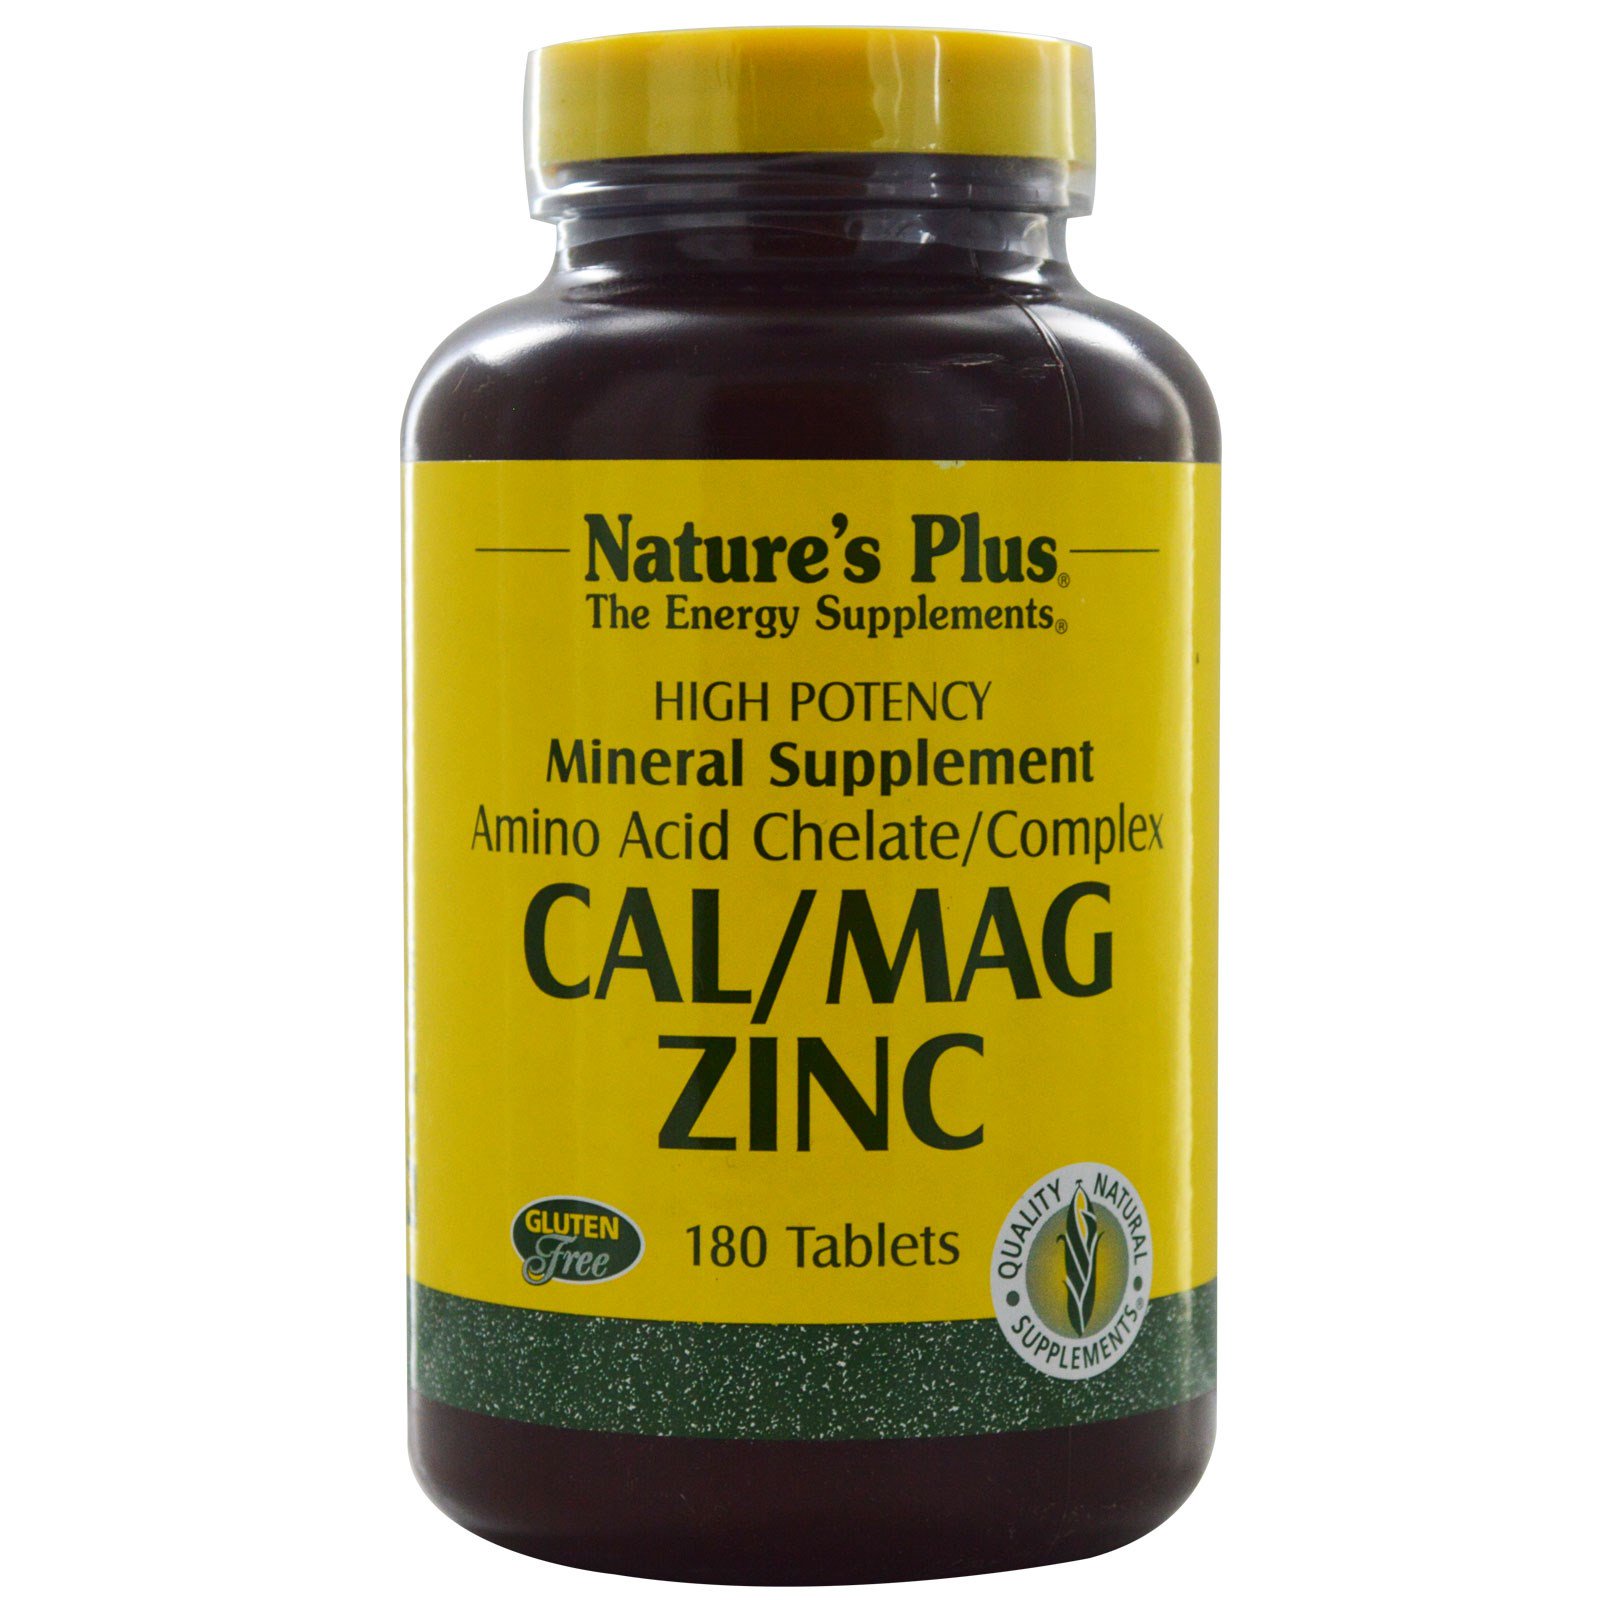 Nature's Plus Cal/Mag Zinc (180 Tablets) - 